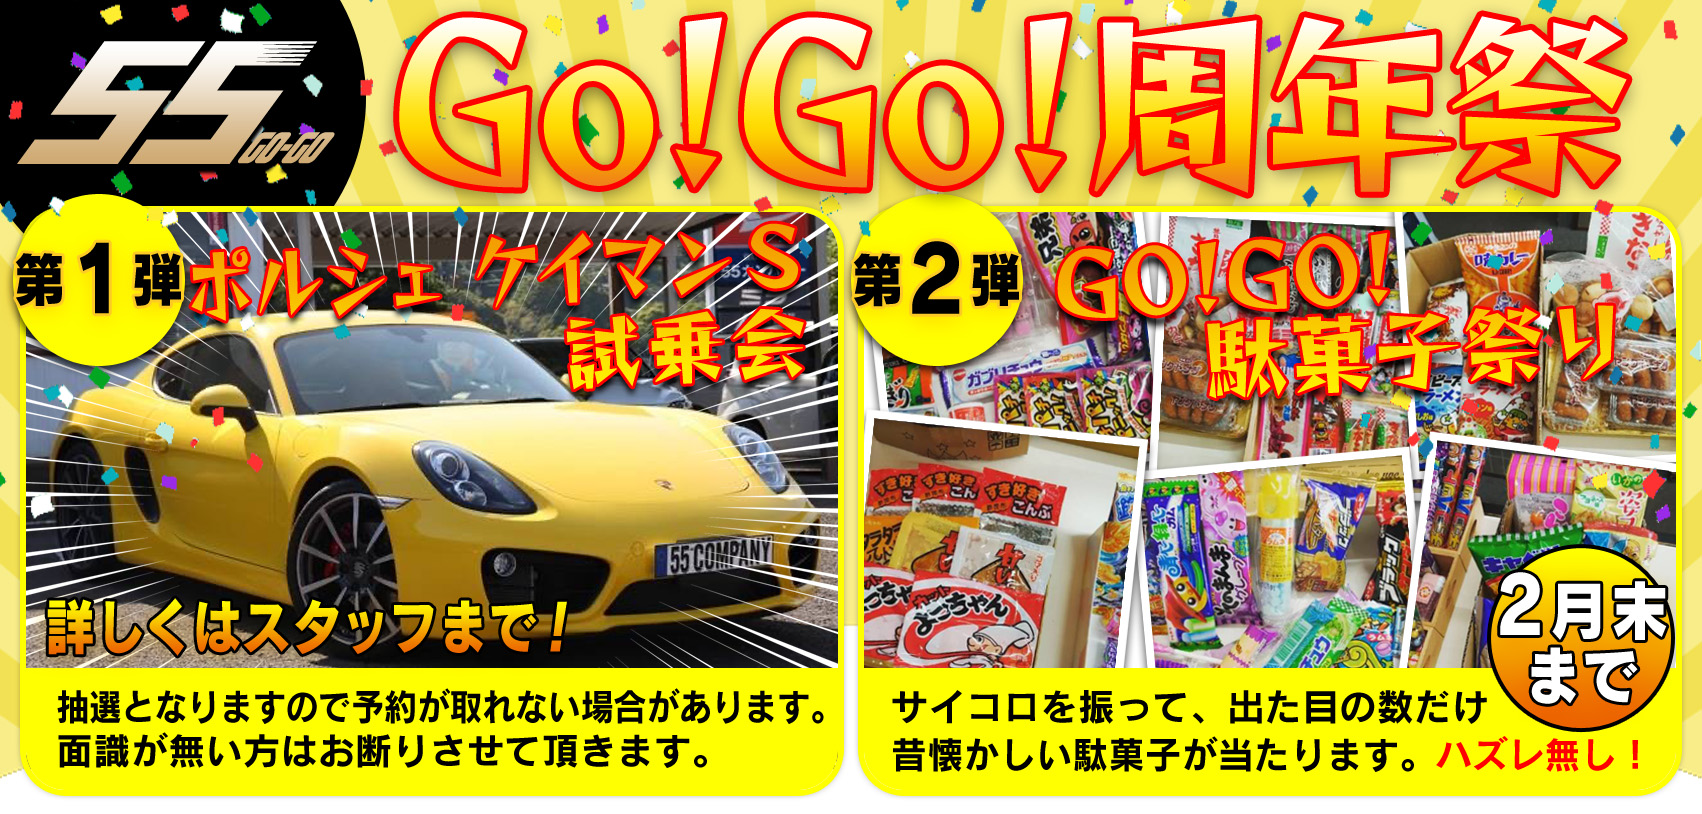 Go!Go!周年祭